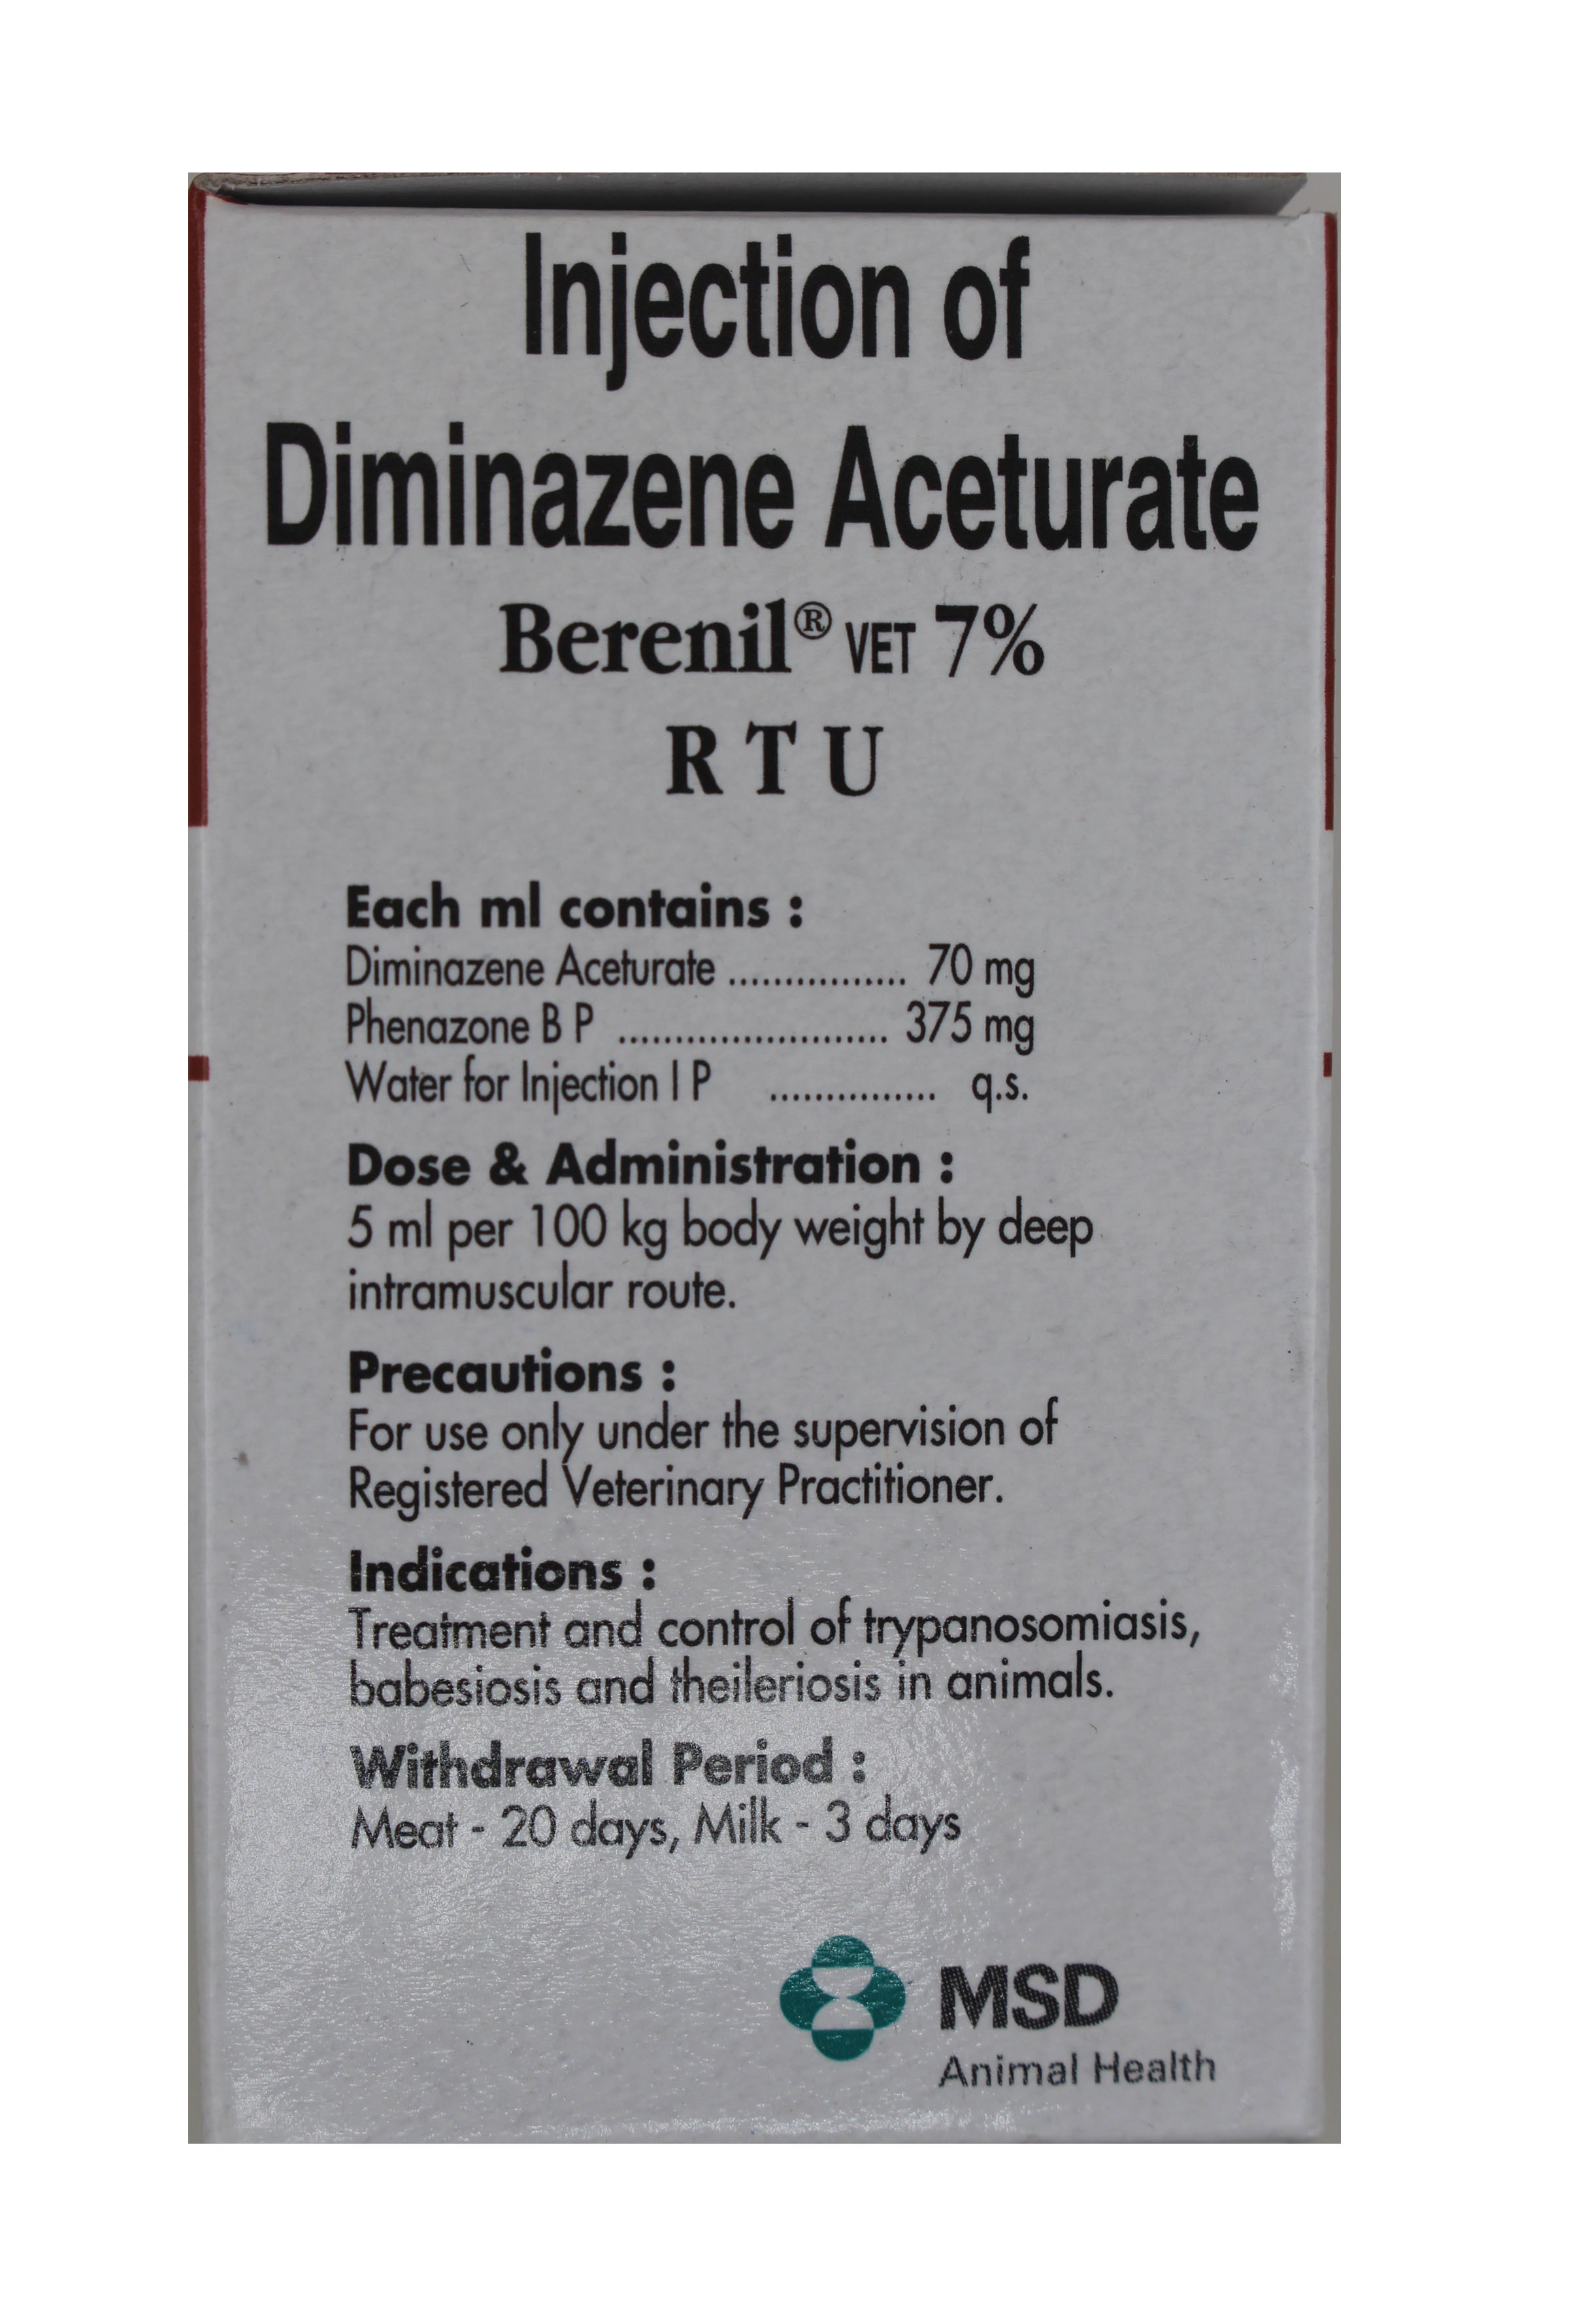 Injection 30ml-diaminazine Aceturate